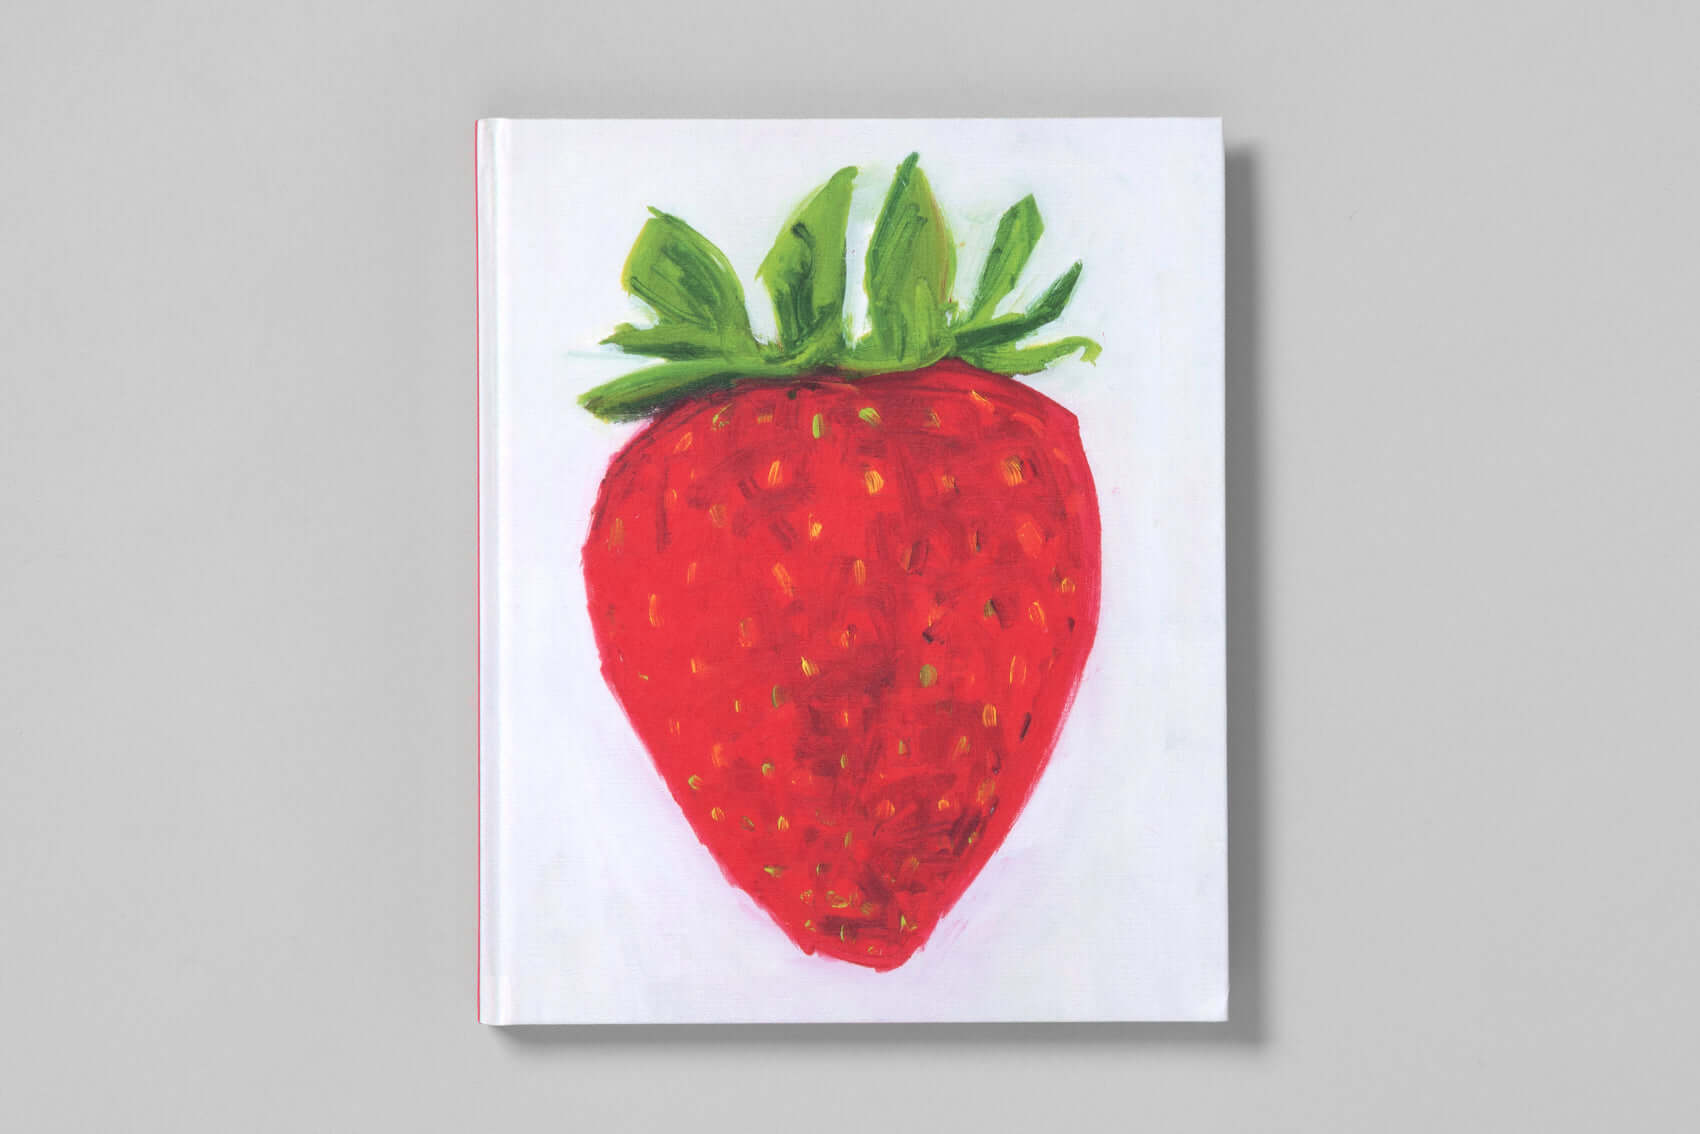 florida-strawberries-blasko-stanley:barker-cover